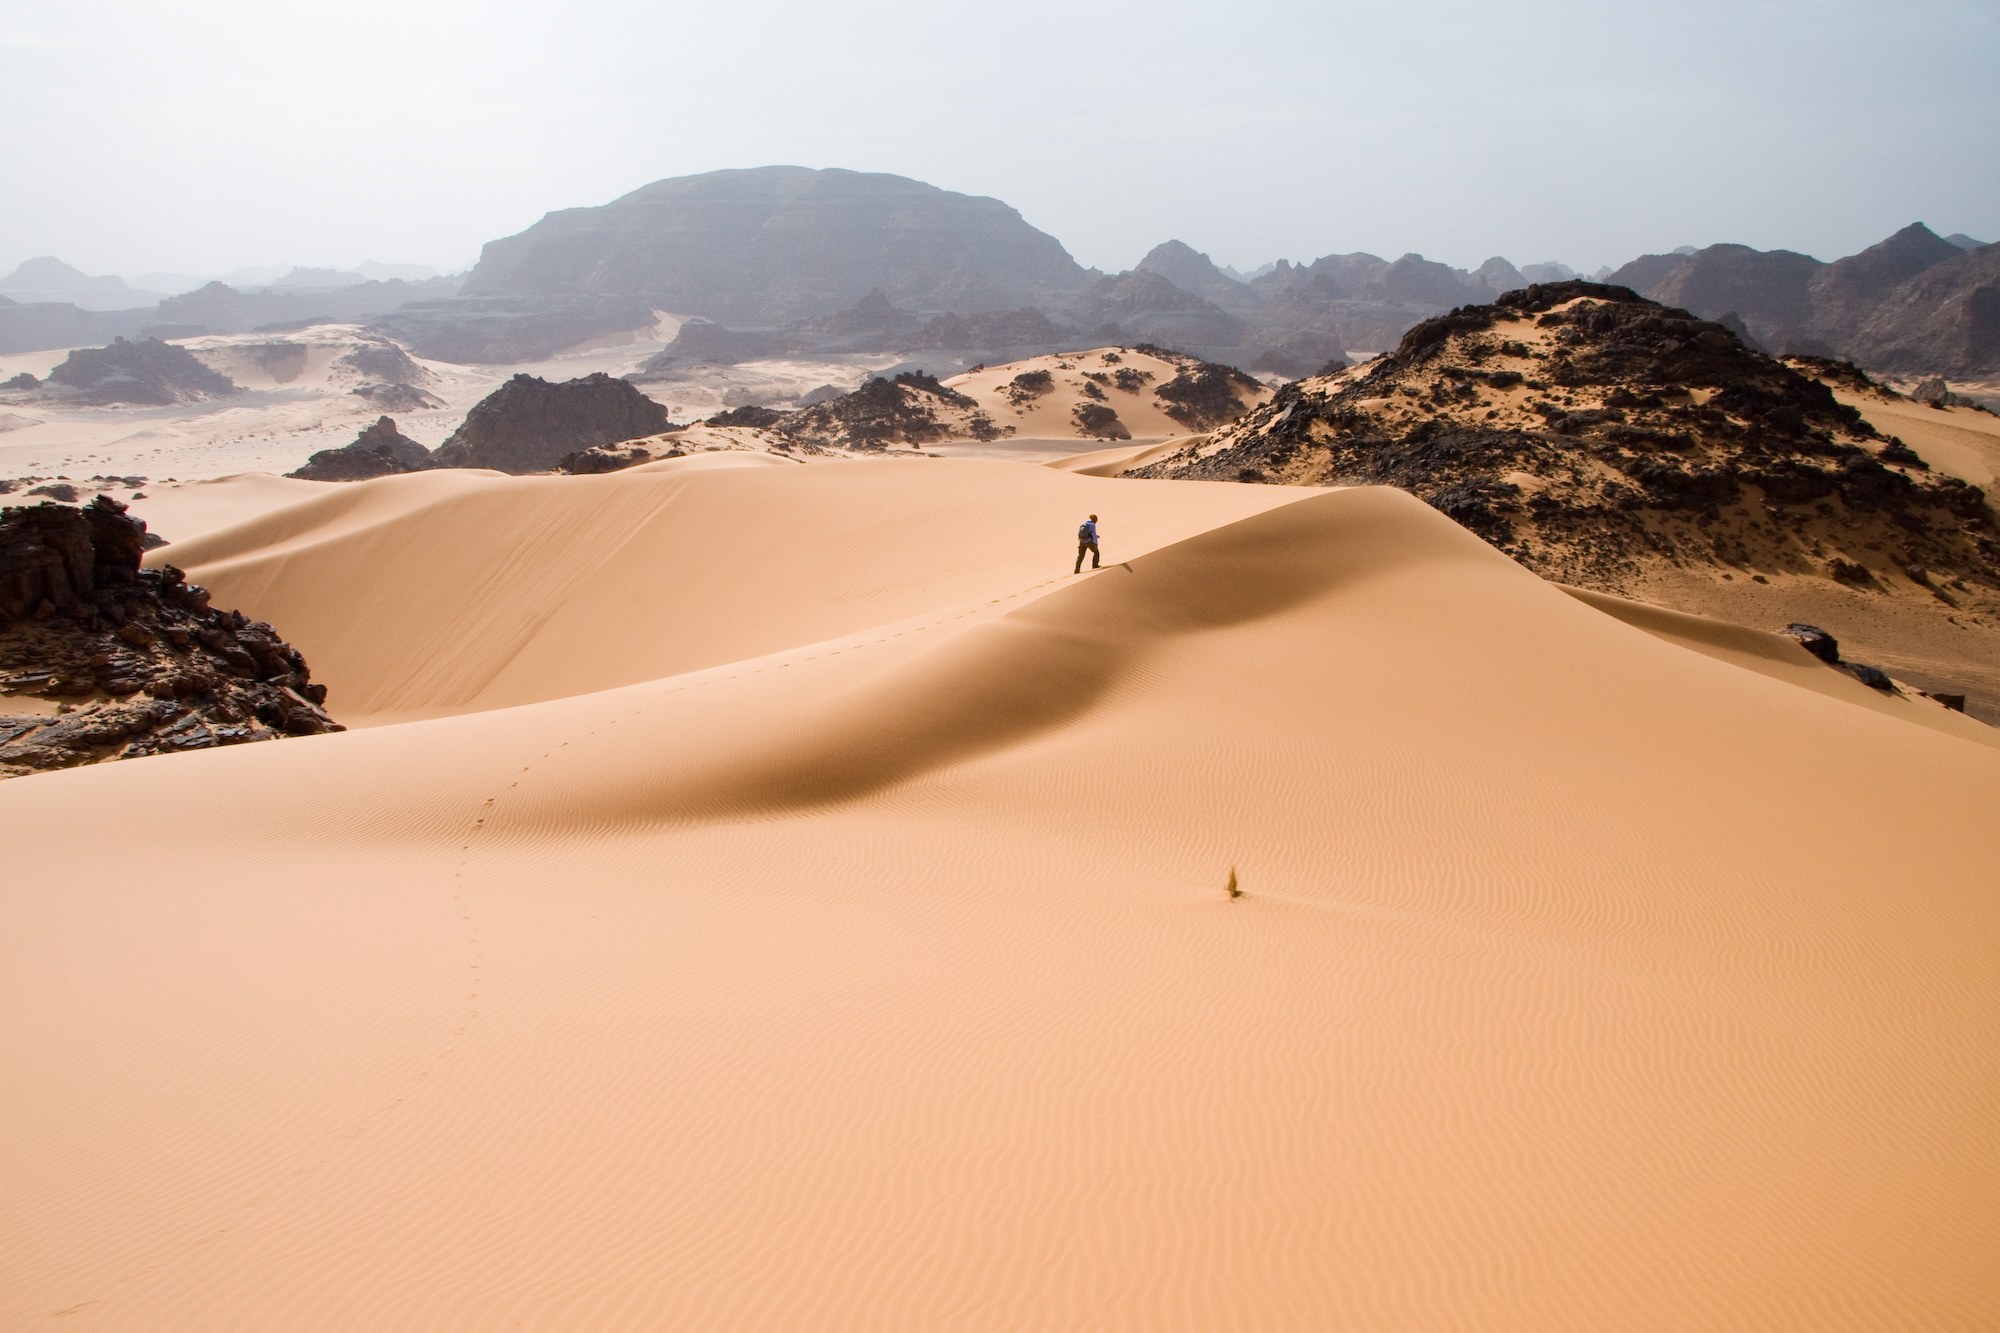 One of the many striking views the Sahara Desert boasts.